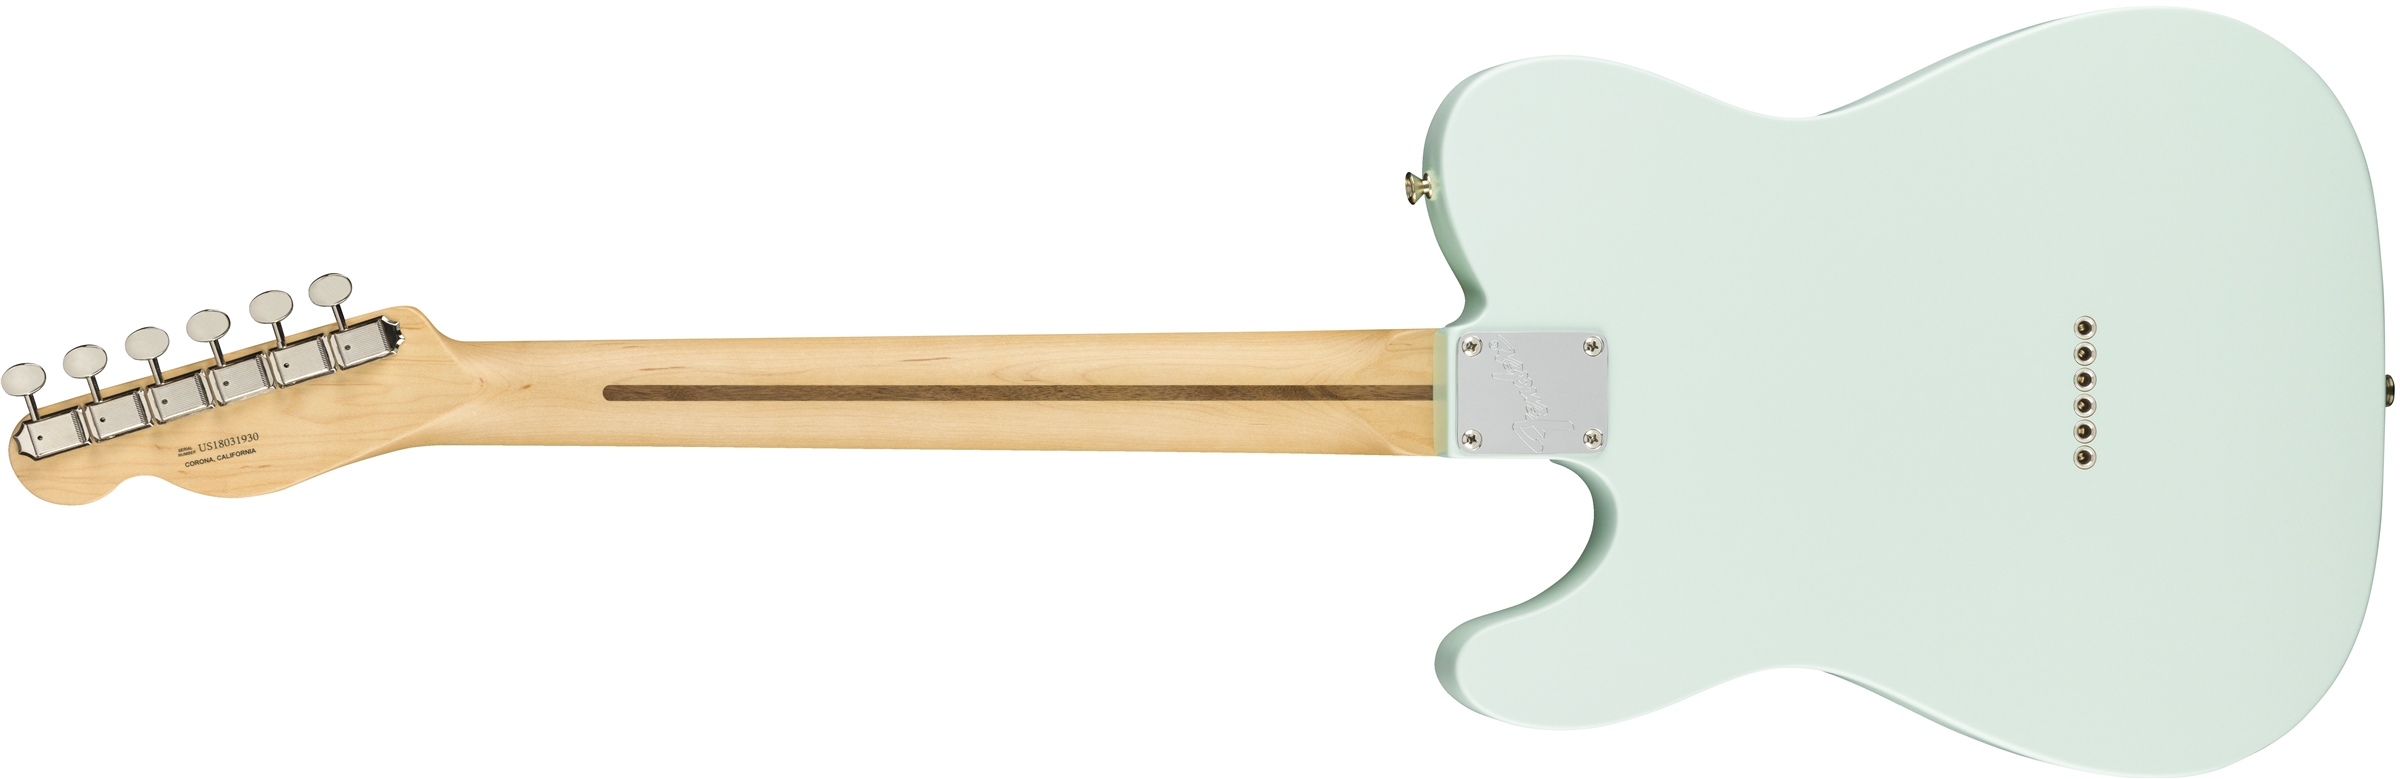 Fender Tele American Performer Usa Rw - Satin Sonic Blue - Guitarra eléctrica con forma de tel - Variation 1